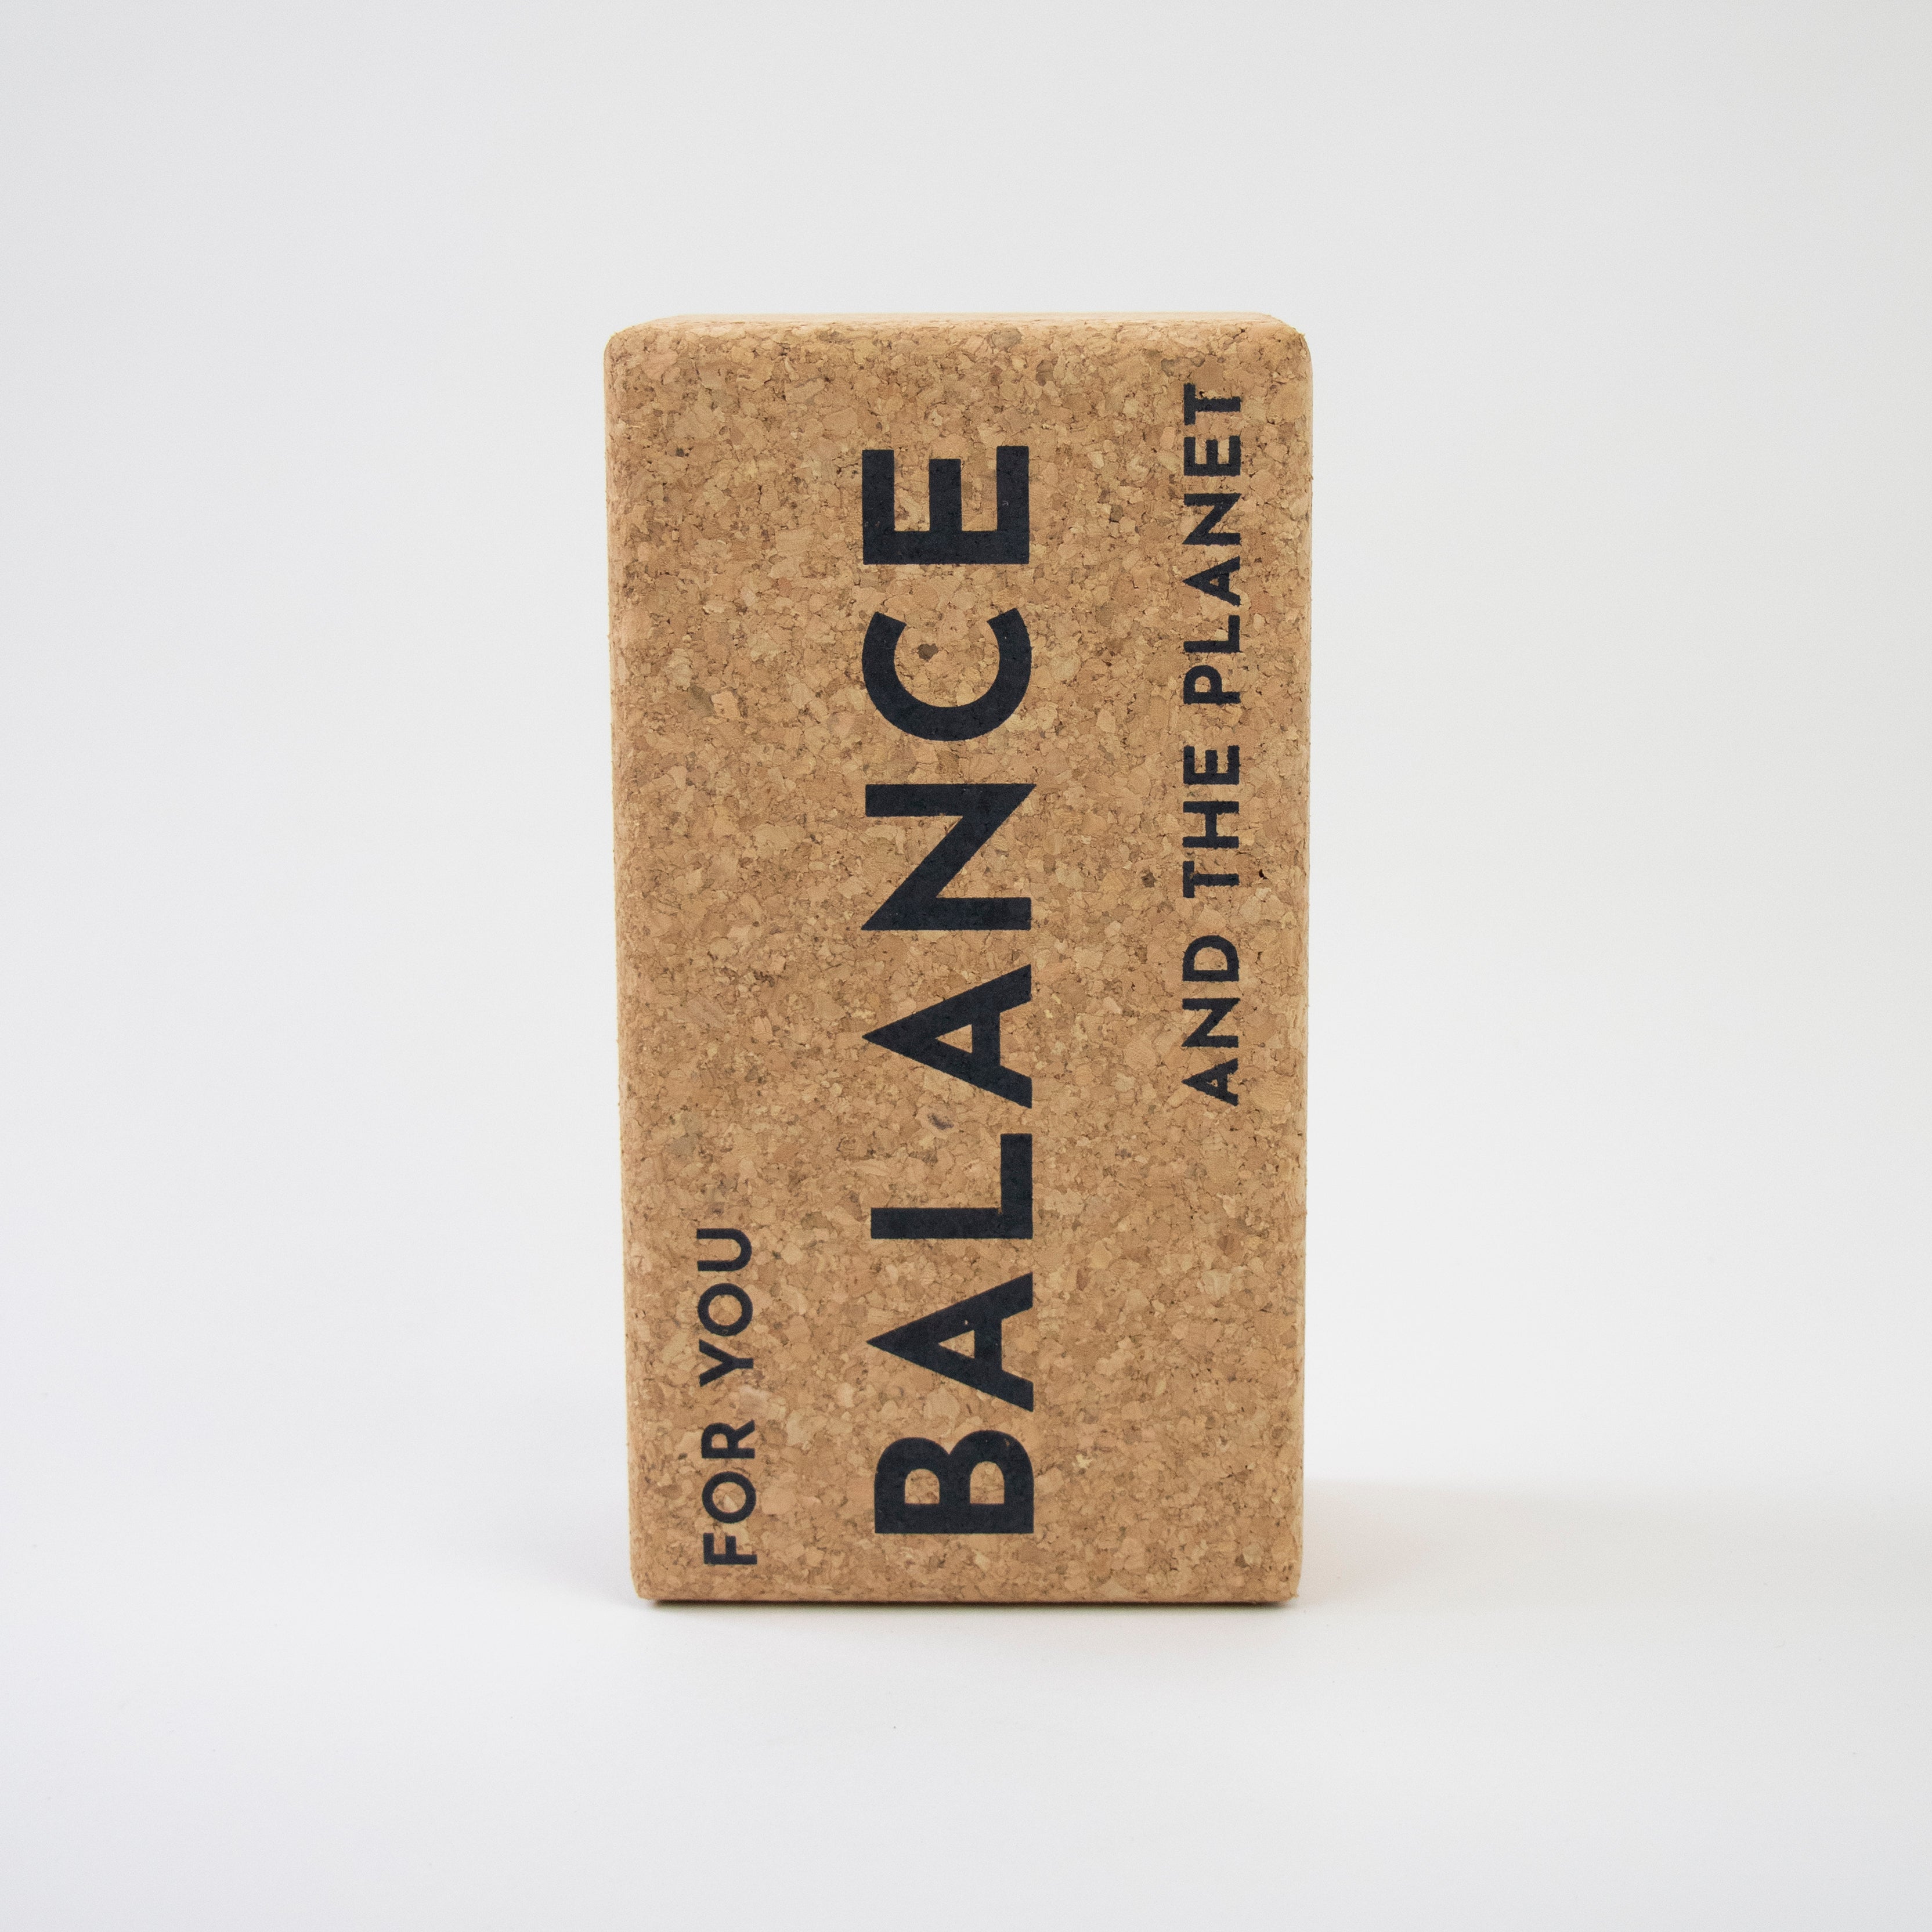 Yoga Block - Balance